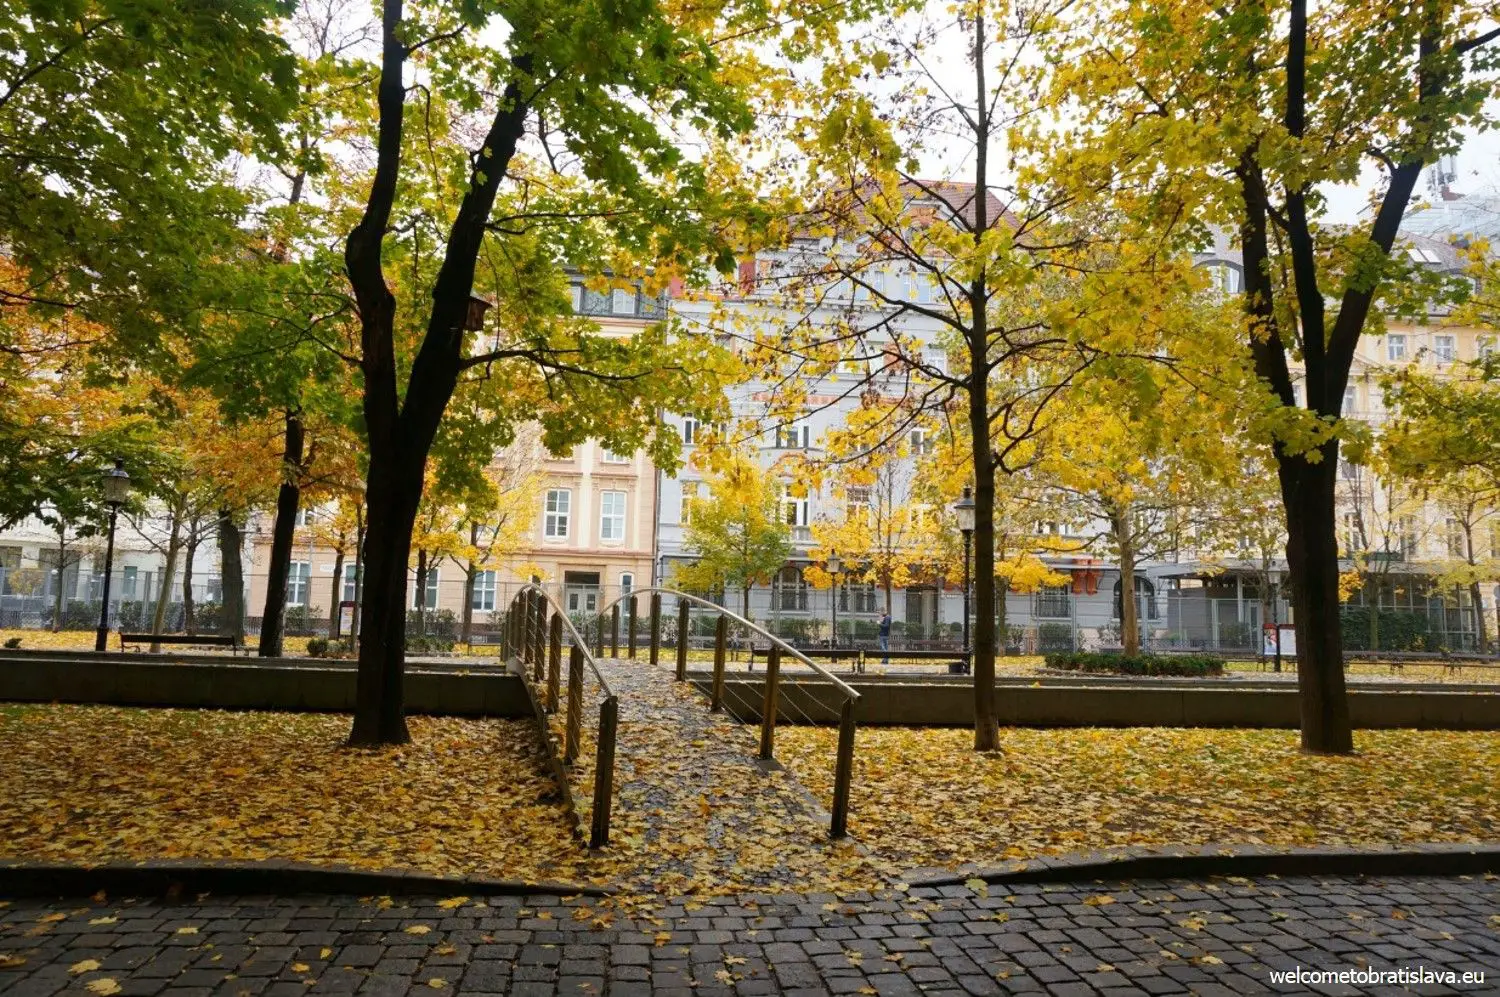 Hviezdoslav's square